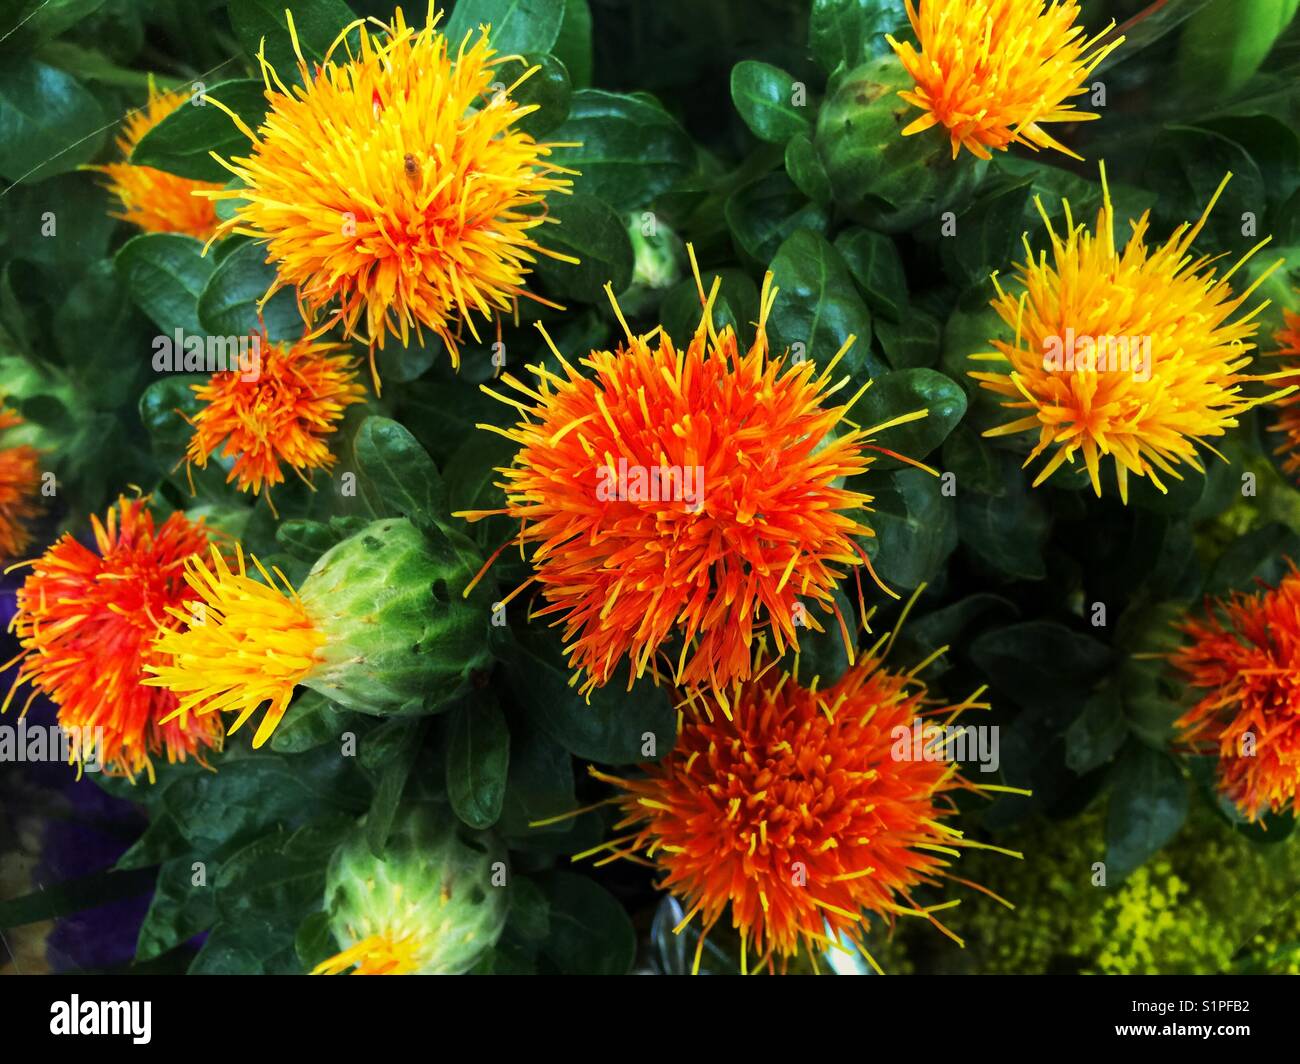 Safflower, carthamus flower, Carthamus tinctorius, bright orange, yellow, thistle like flower Stock Photo